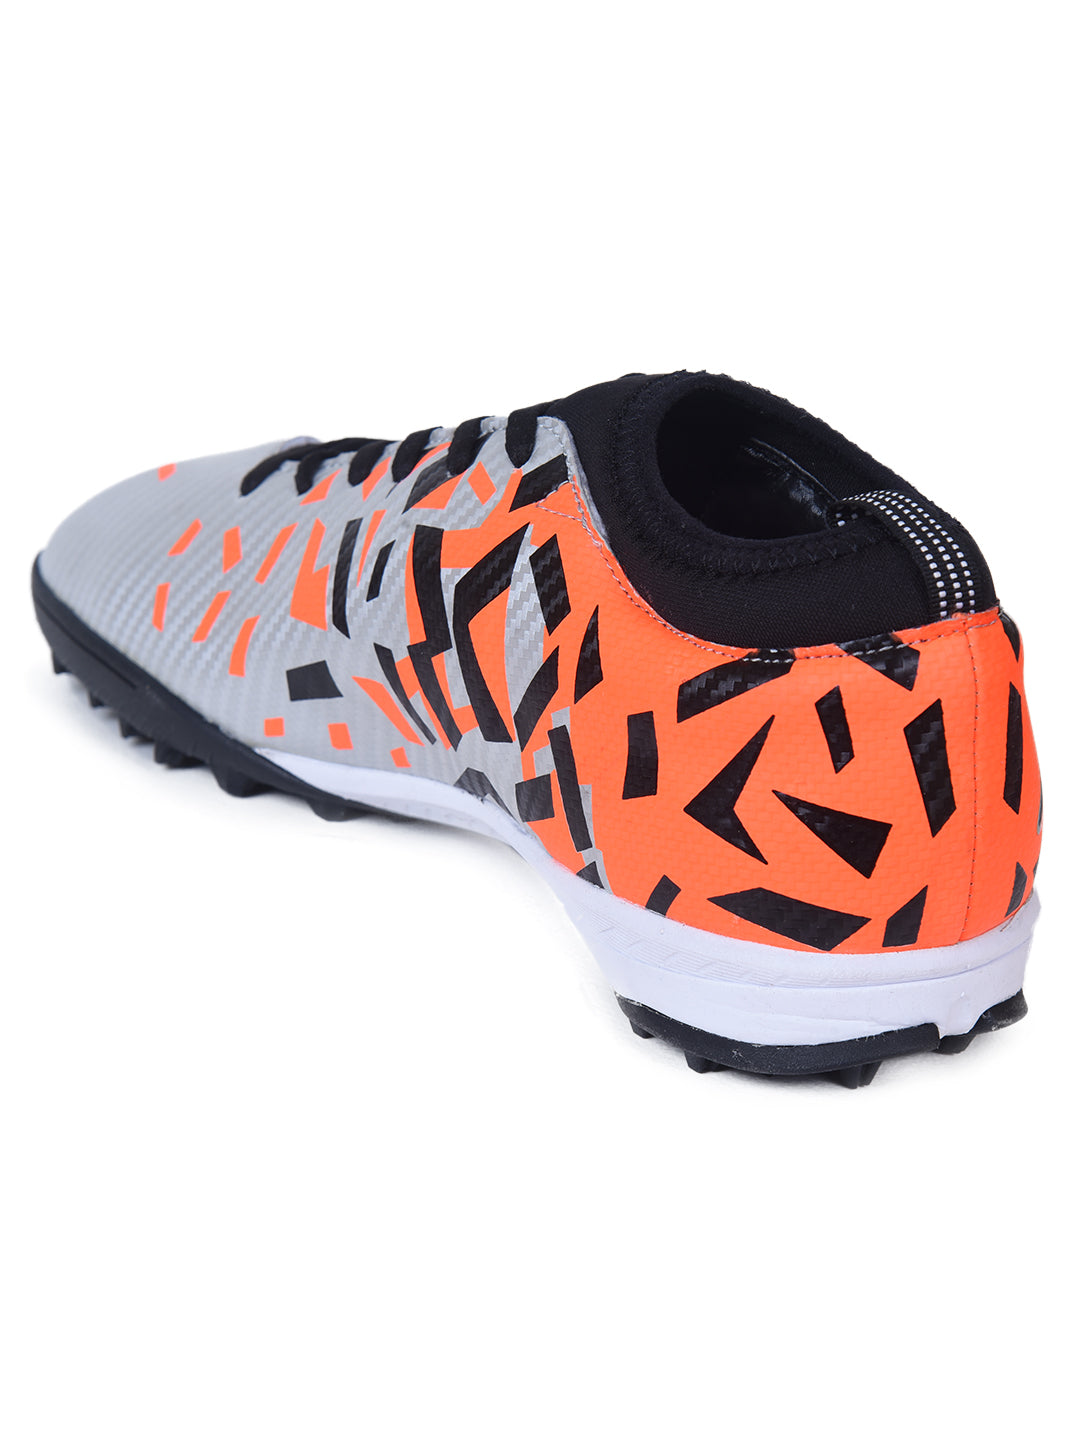 Impakto Turf Men's Orange Football Shoes